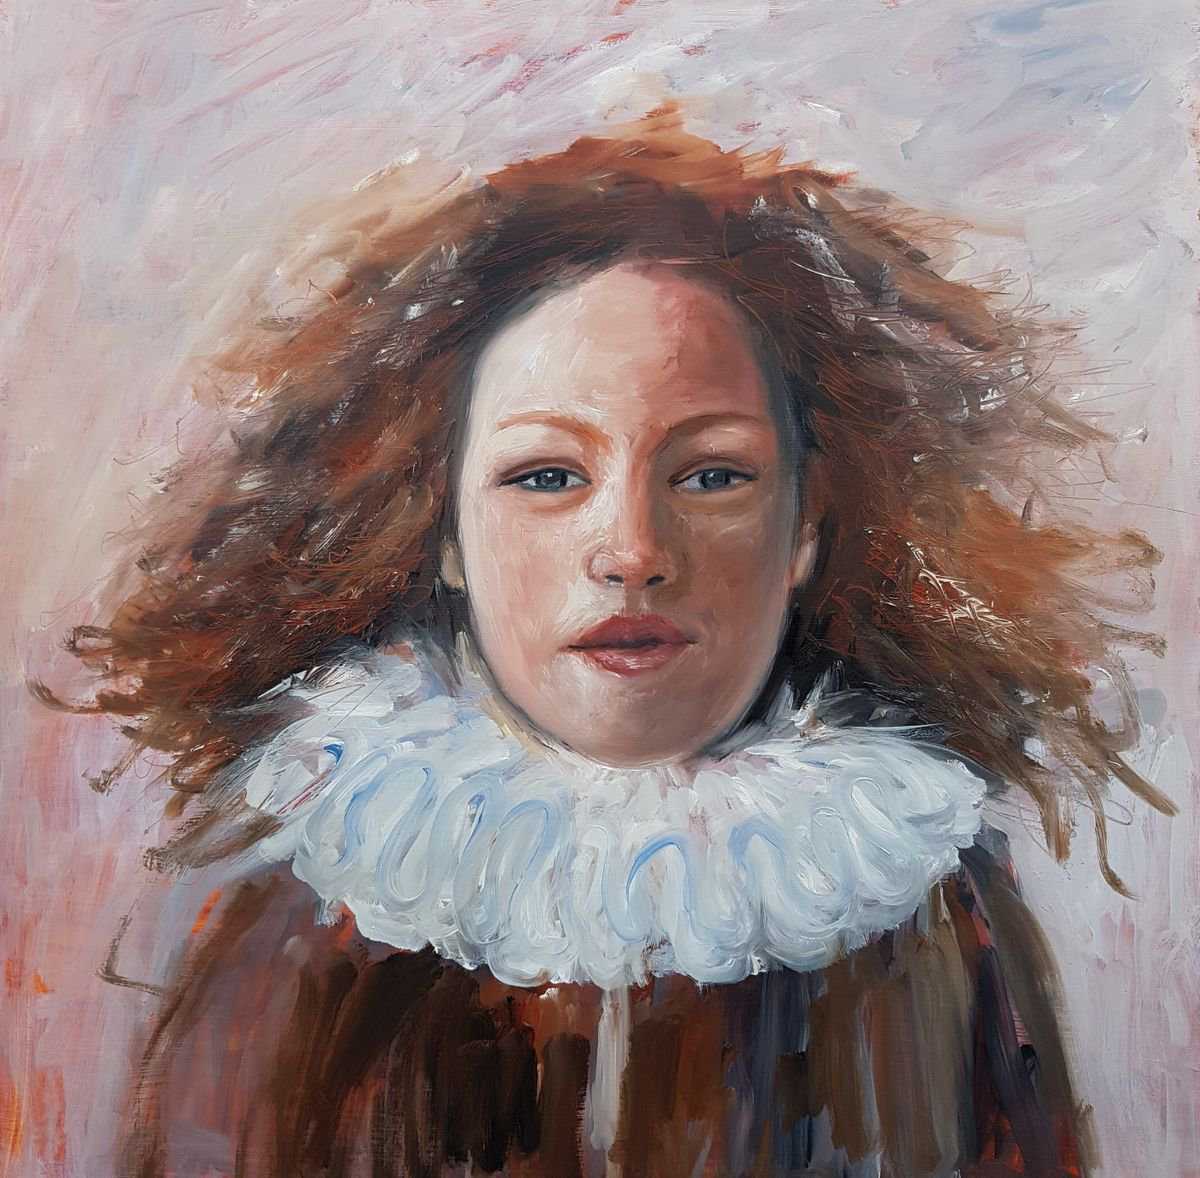 daughter of Rembrandt by Els Driesen